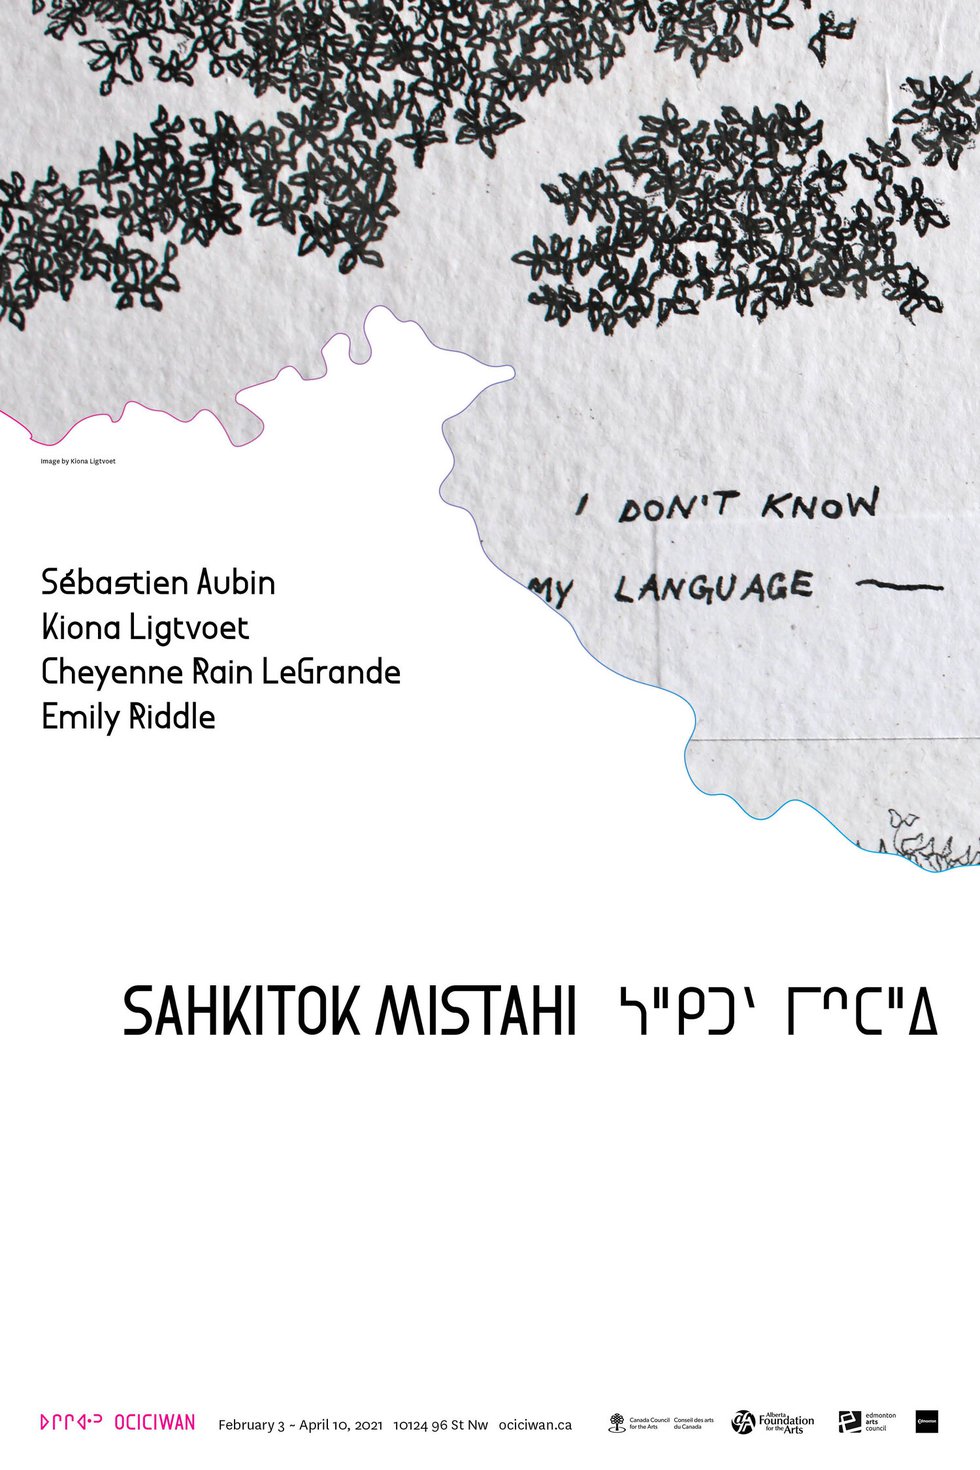 Kiona Ligtvoet, "I Don't Know My Language," 2020